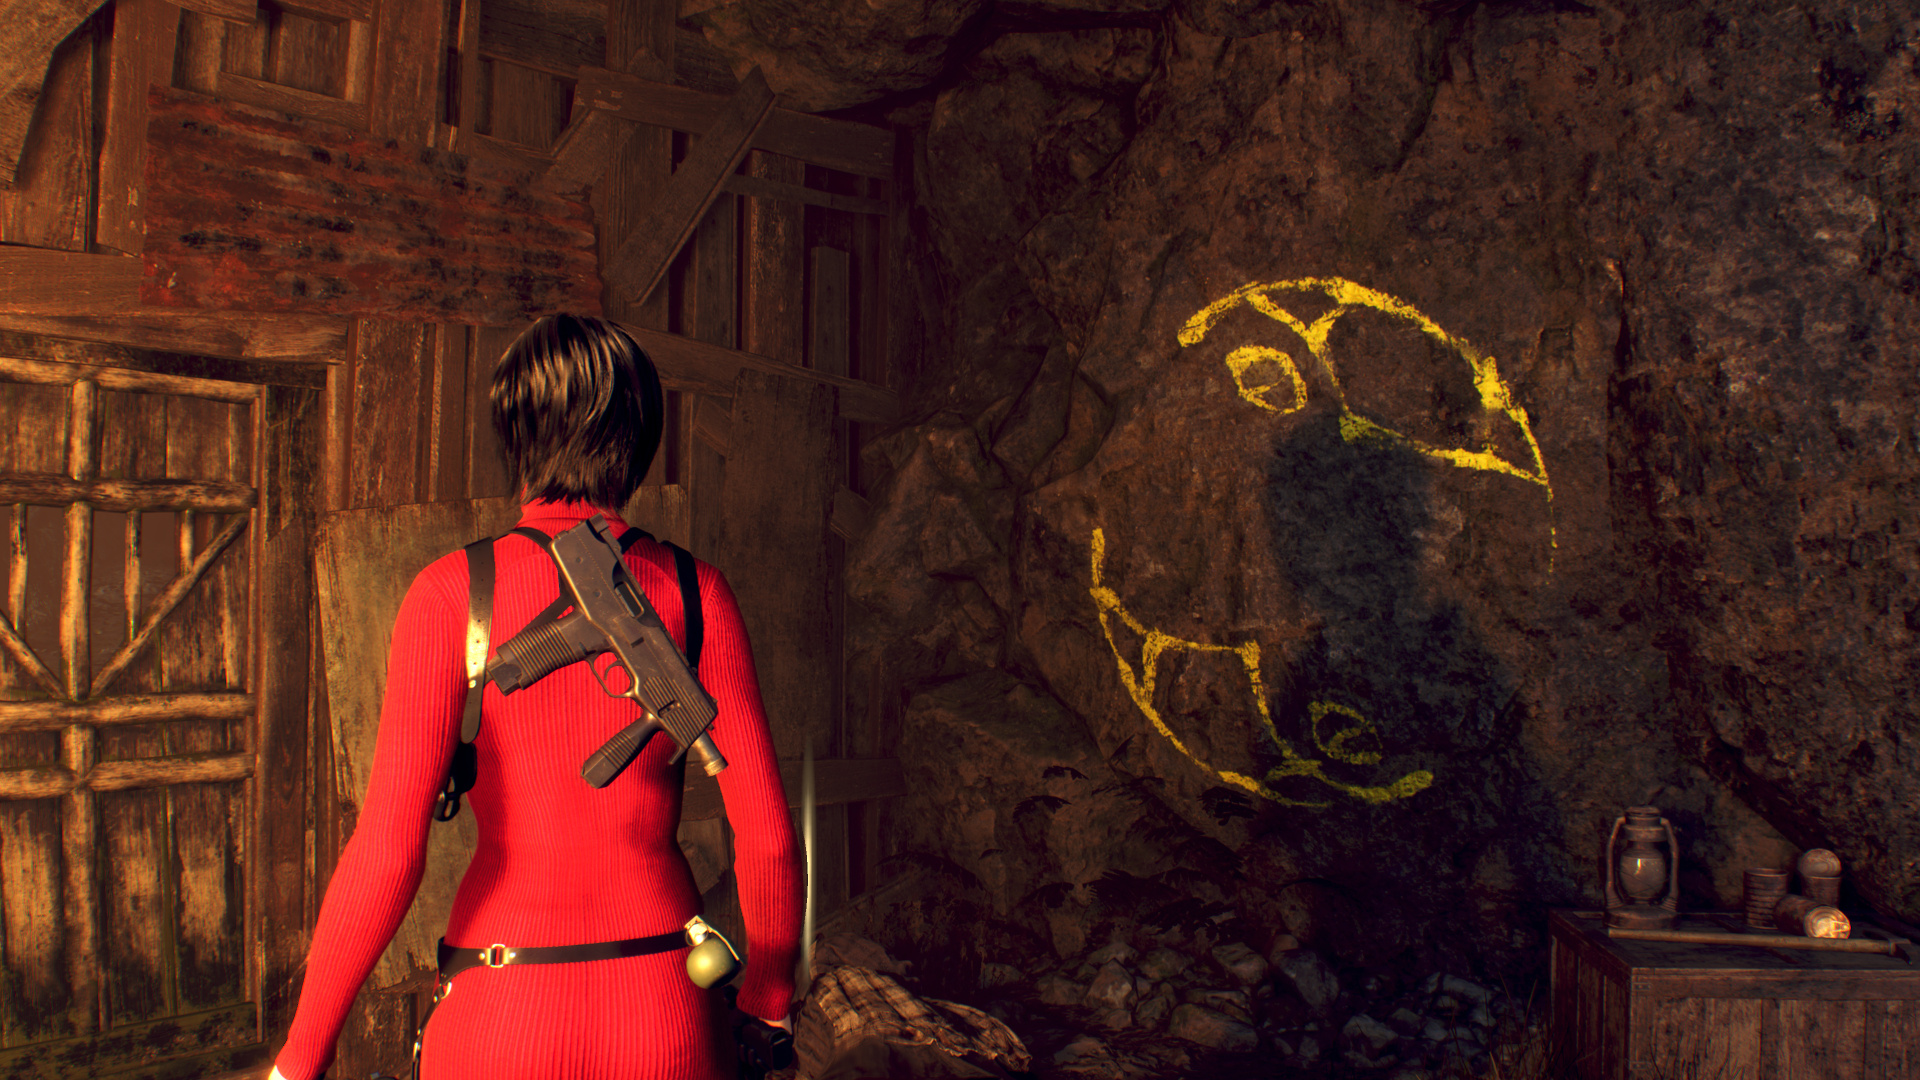 Resident Evil 4 Separate Ways DLC, starring Ada Wong, DLC Out Next